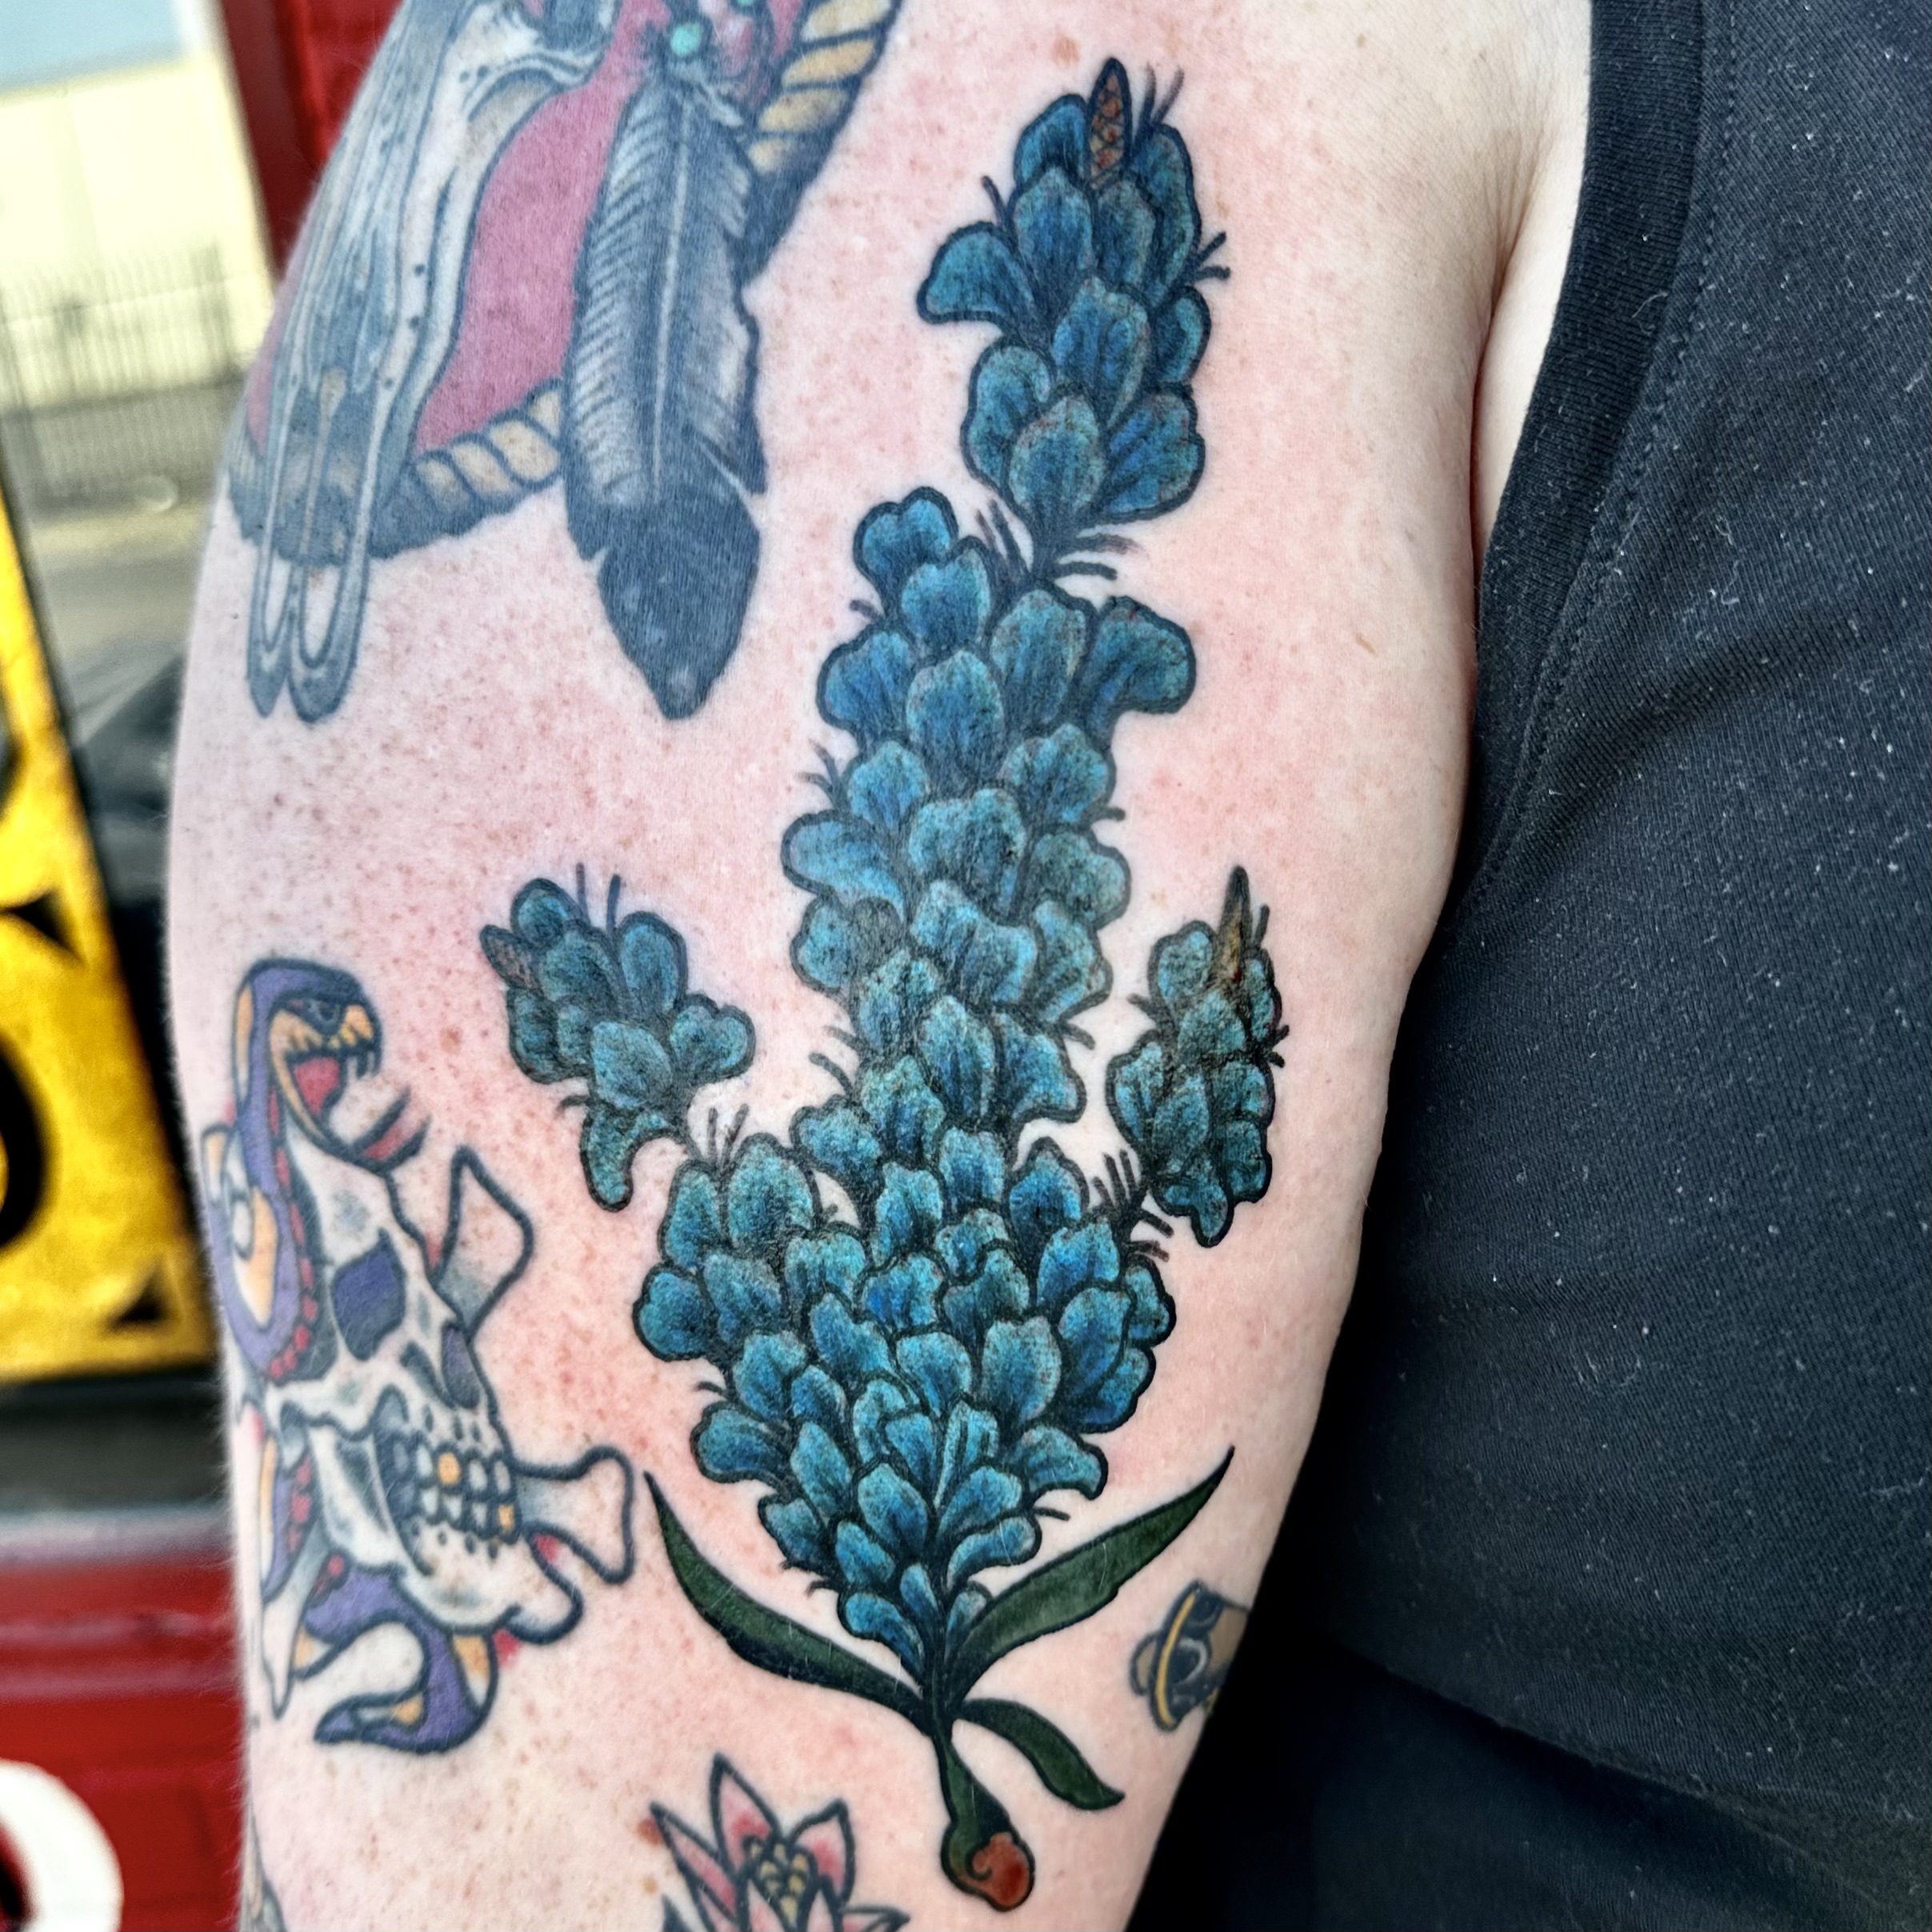 Tattoo of blue flowers from professional tattoo artist in Dallas